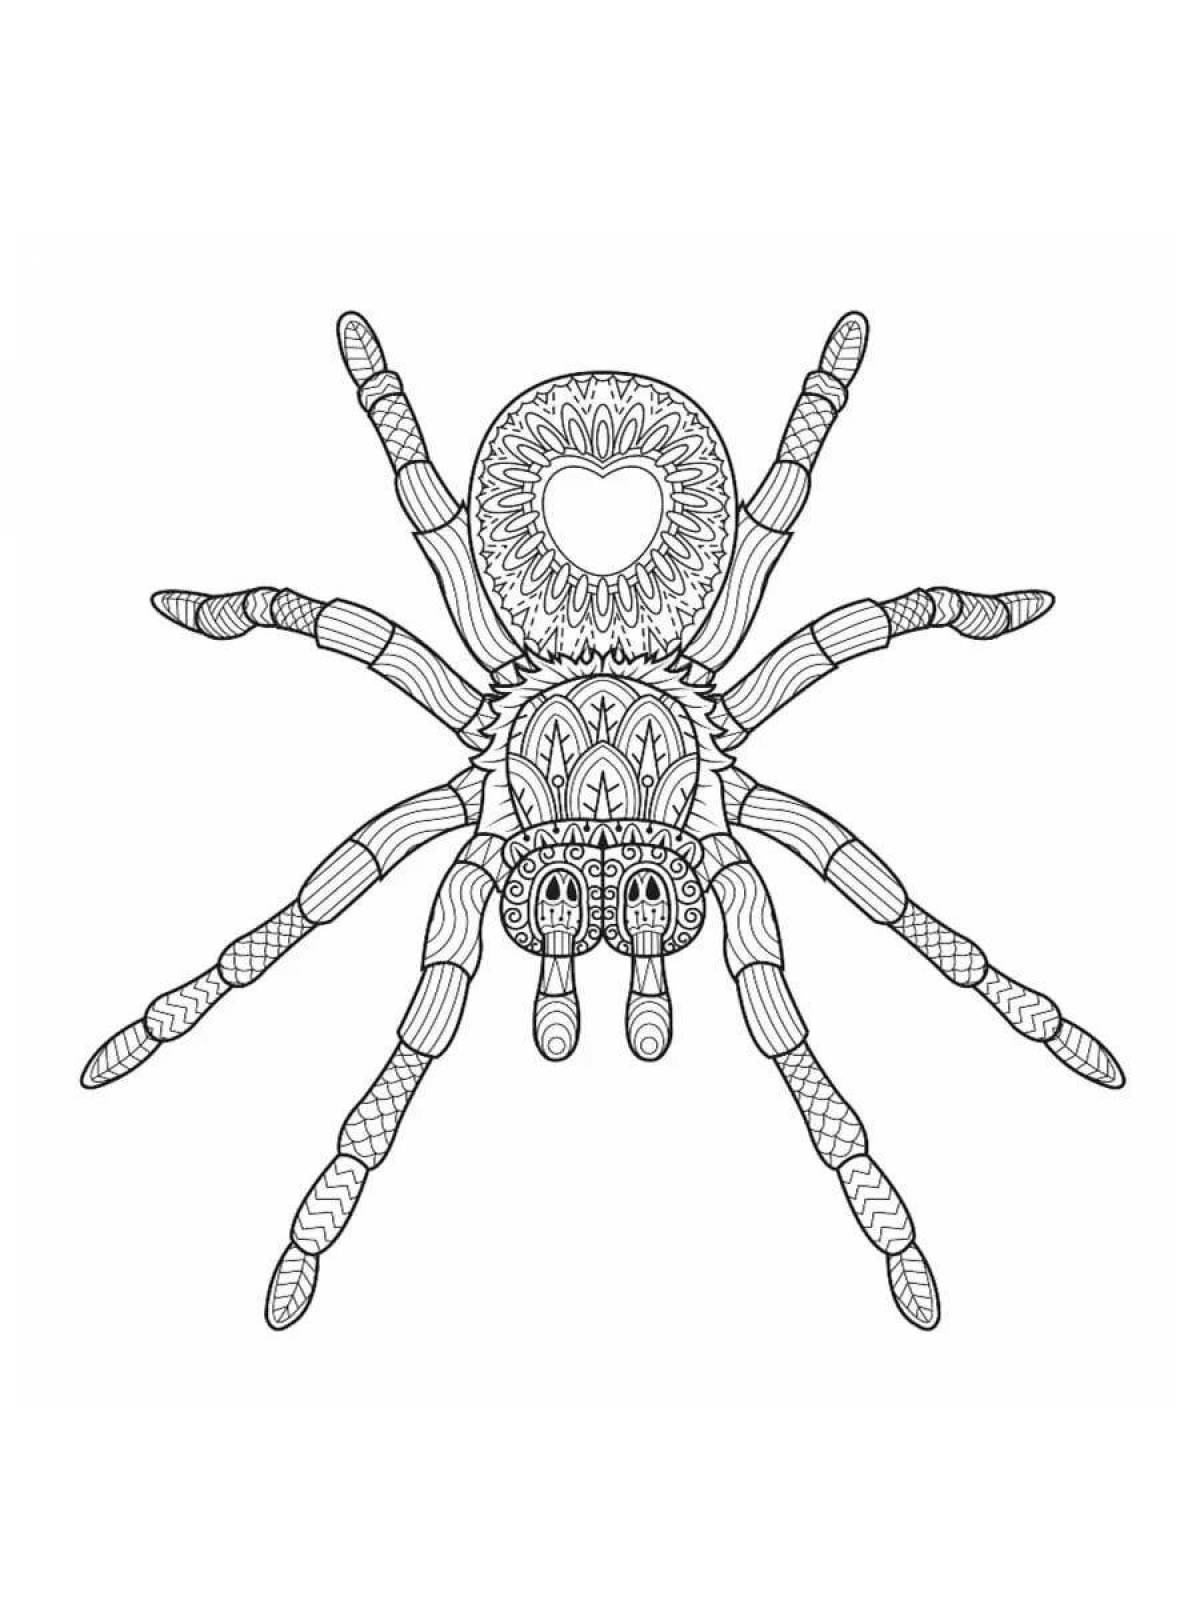 Impressive tarantula spider coloring page